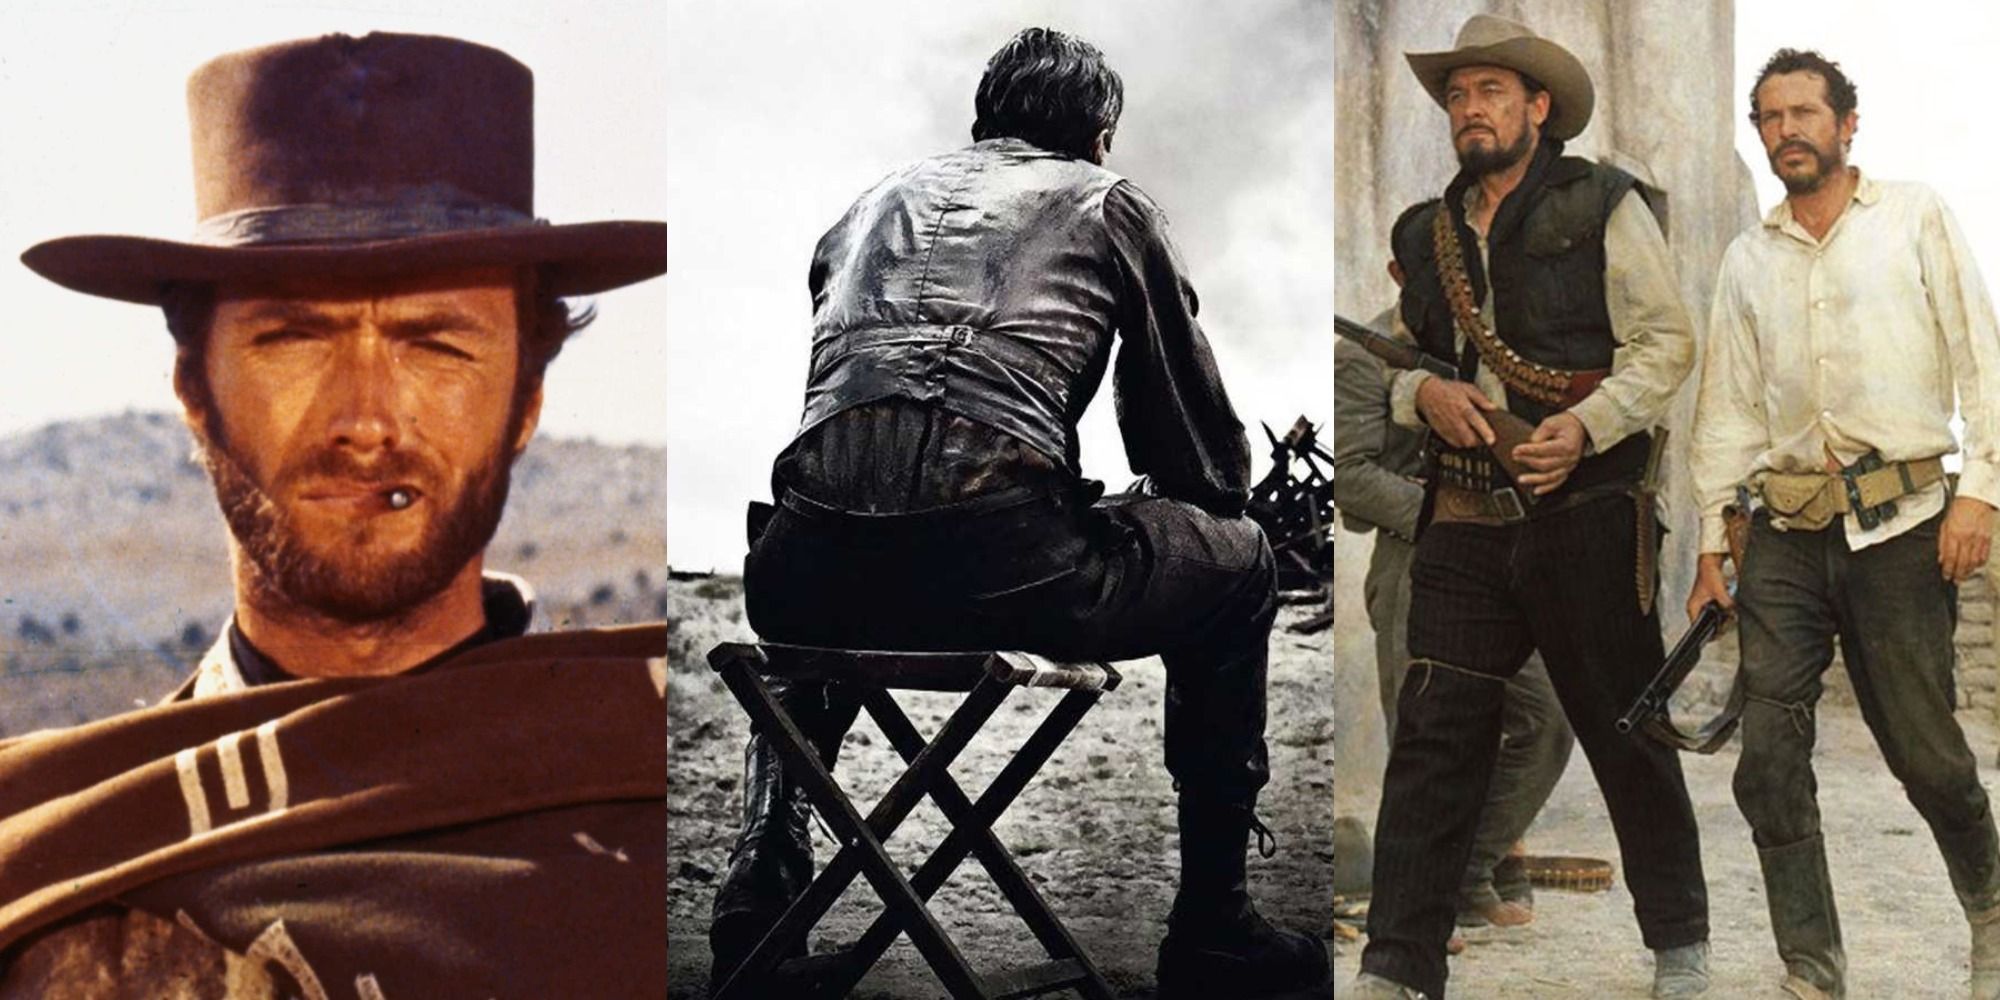 Screenshots of Western movies